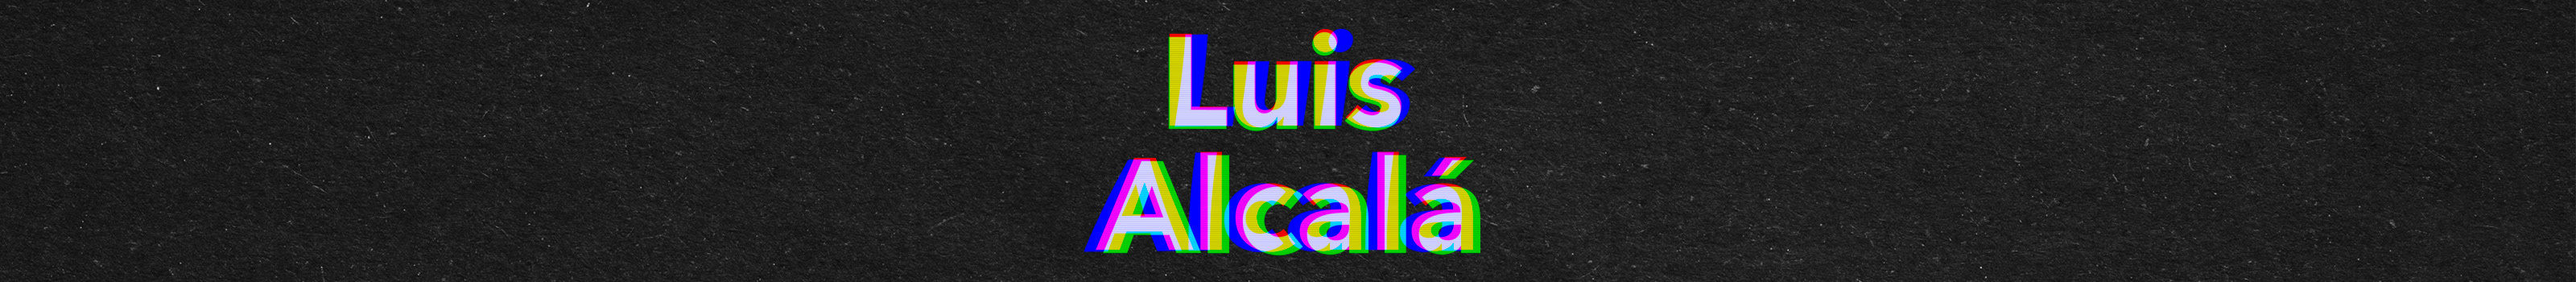 Luis Fernando Alcalá Uscangas profilbanner